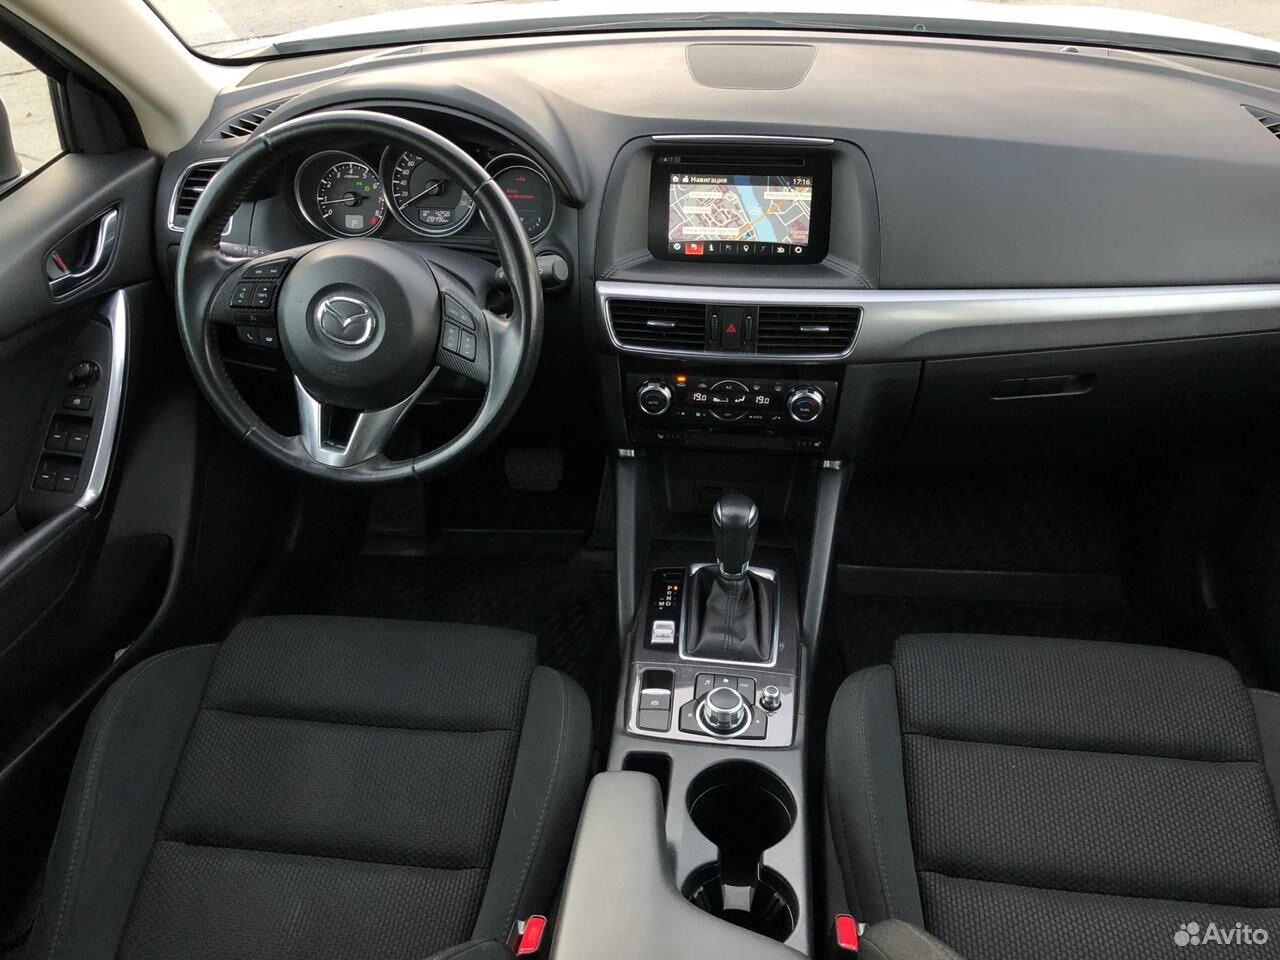 Мазда сх5 цепь. Бардачок Mazda CX-5. Mazda CX 5 педали. Mazda CX 5 fuse Slot. Mazda CX 5 II крепление для смартфона.